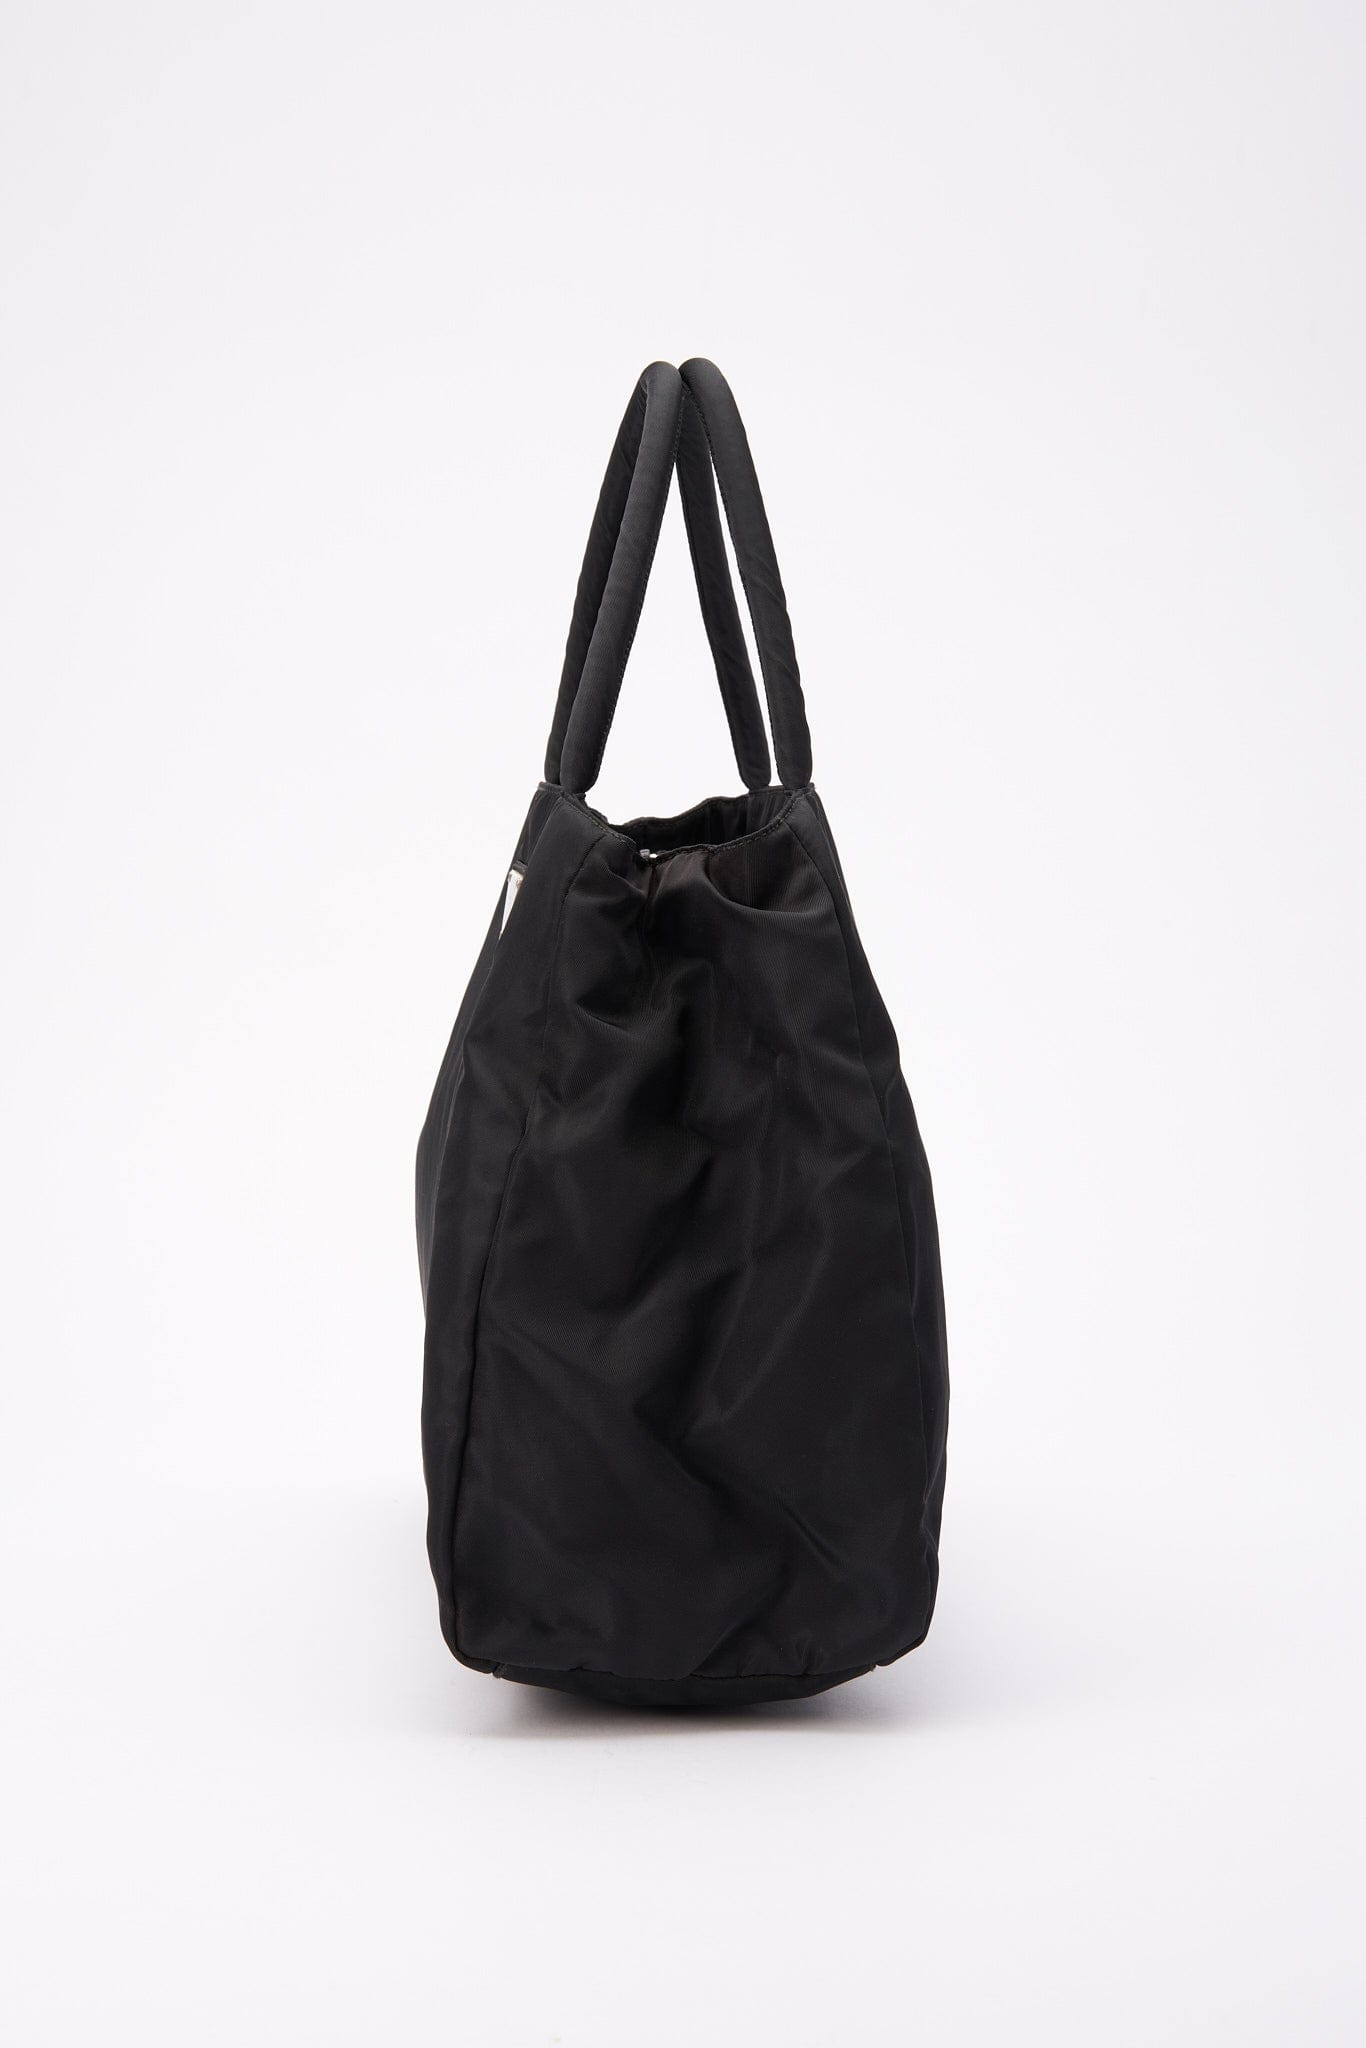 Vintage Prada Black Nylon Tote Bag